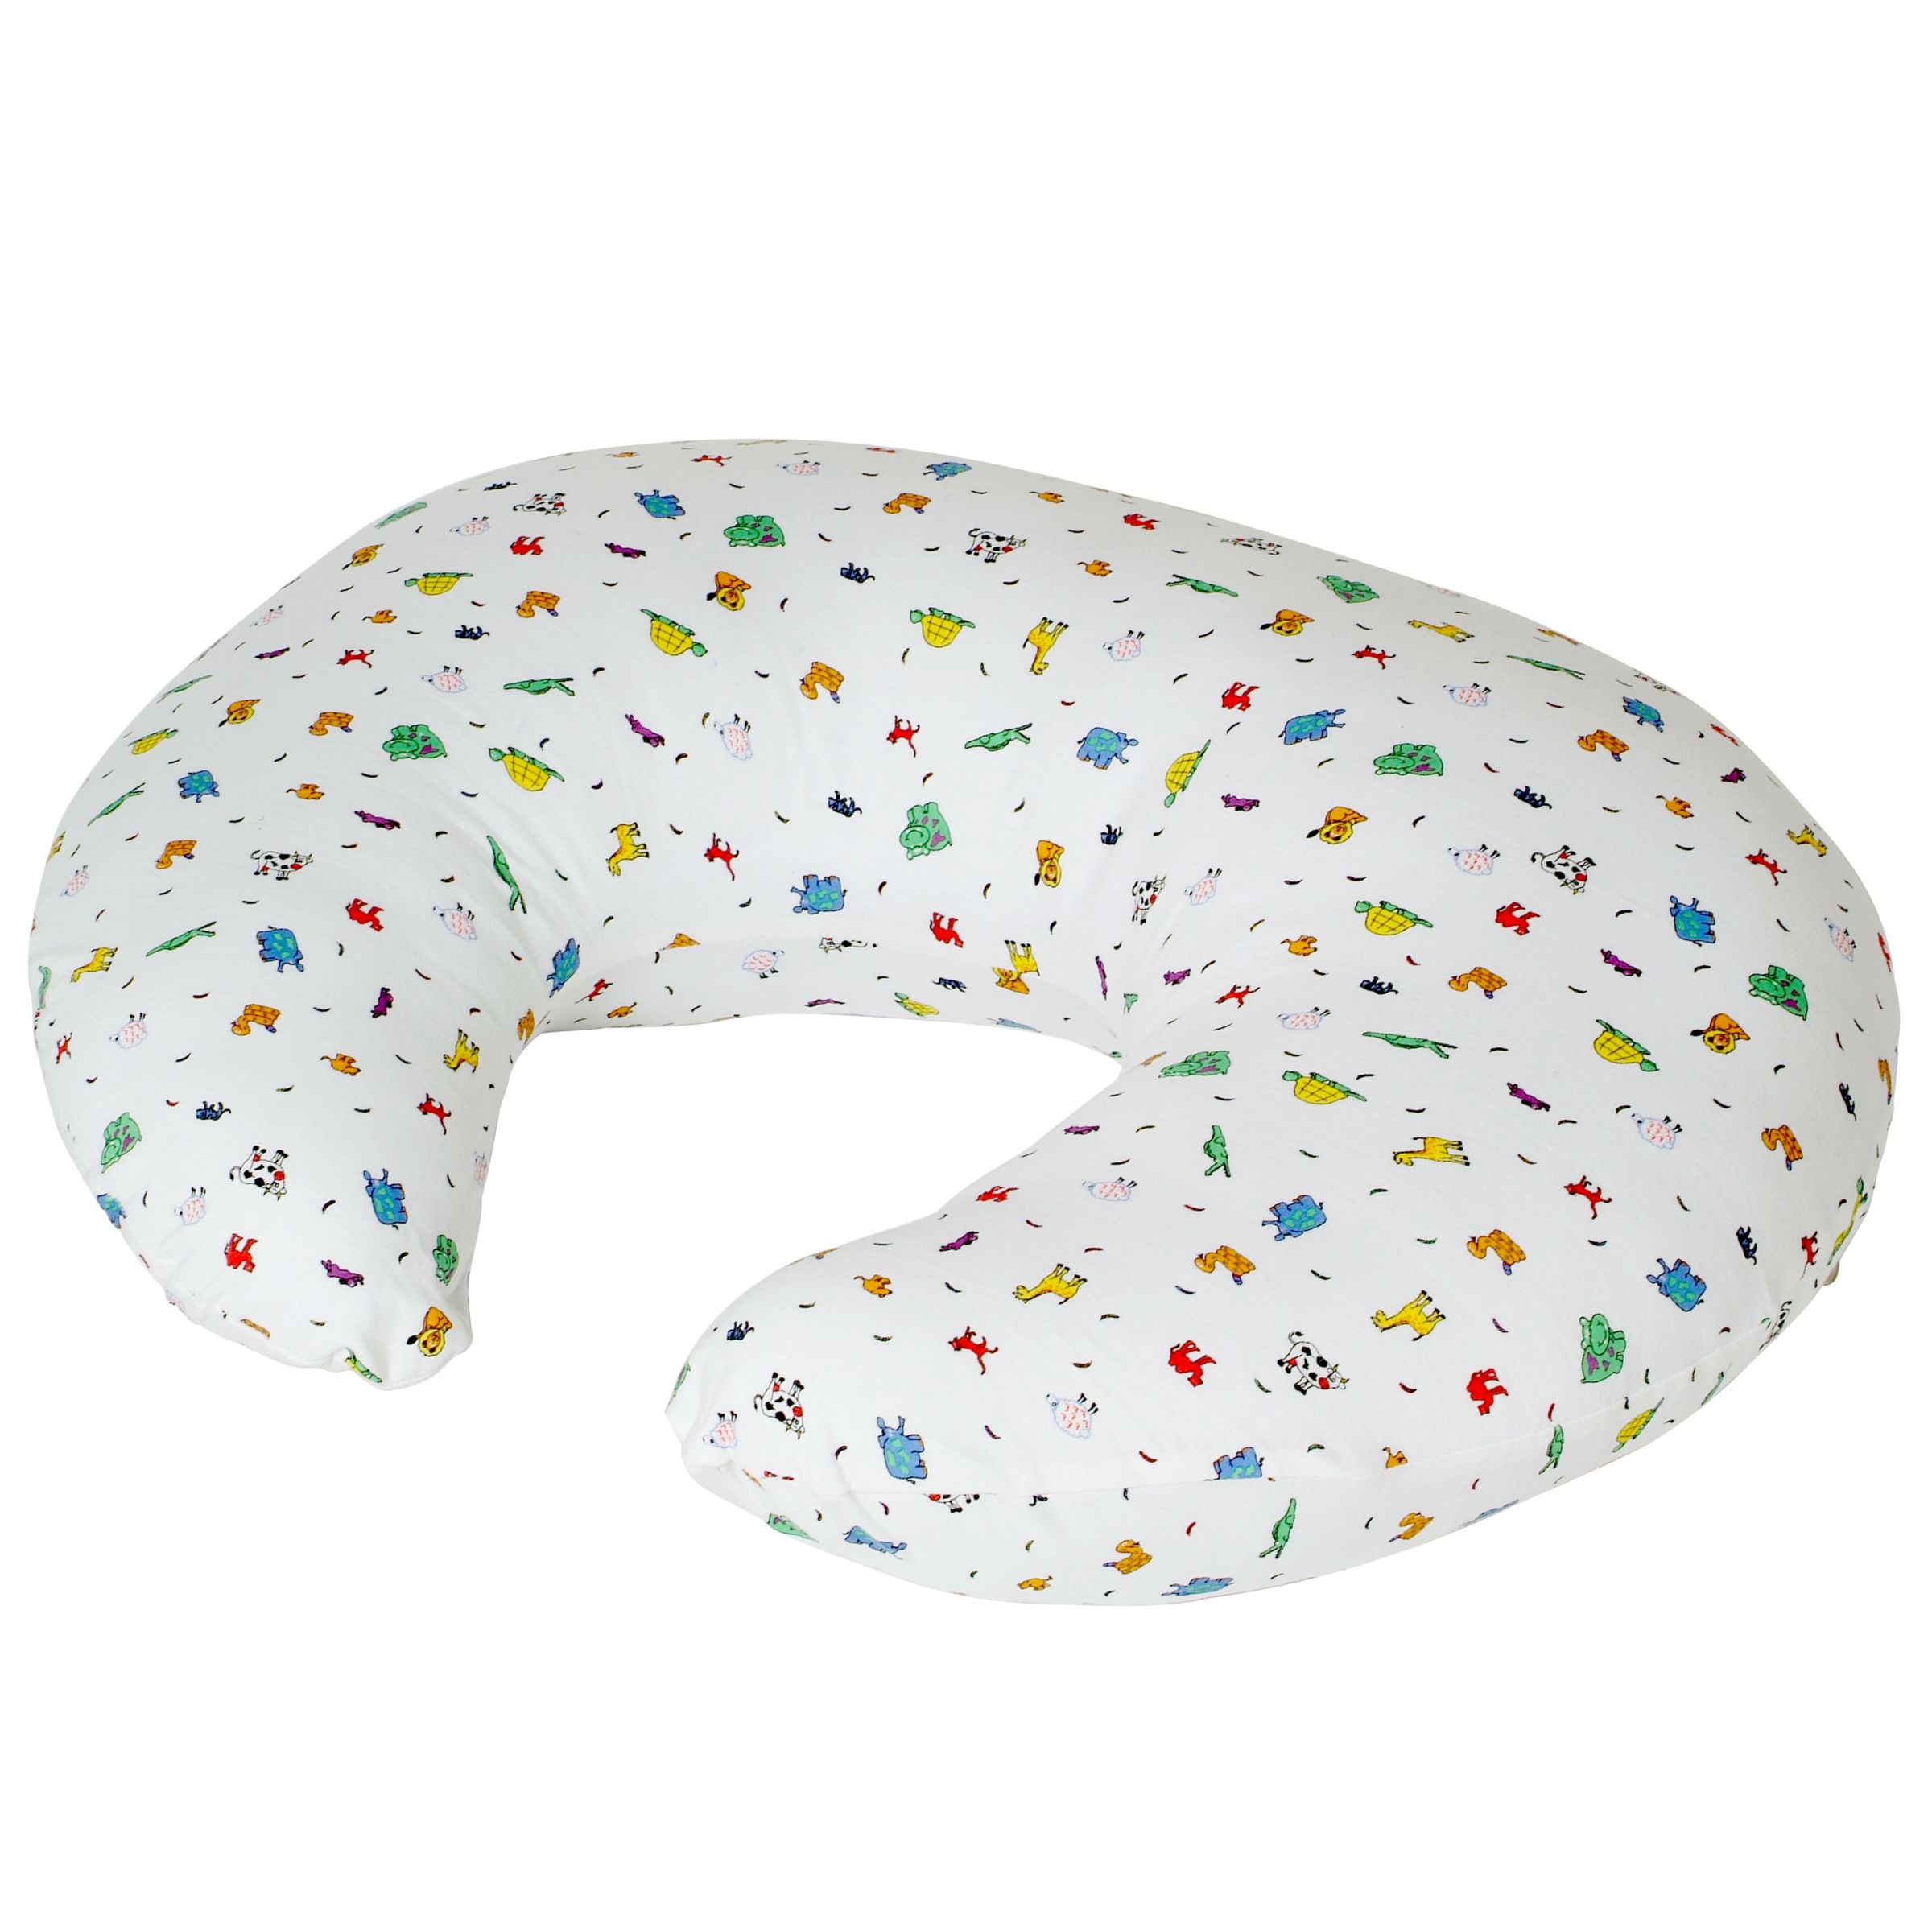 Widgey Donut Pillow Cover, Animal